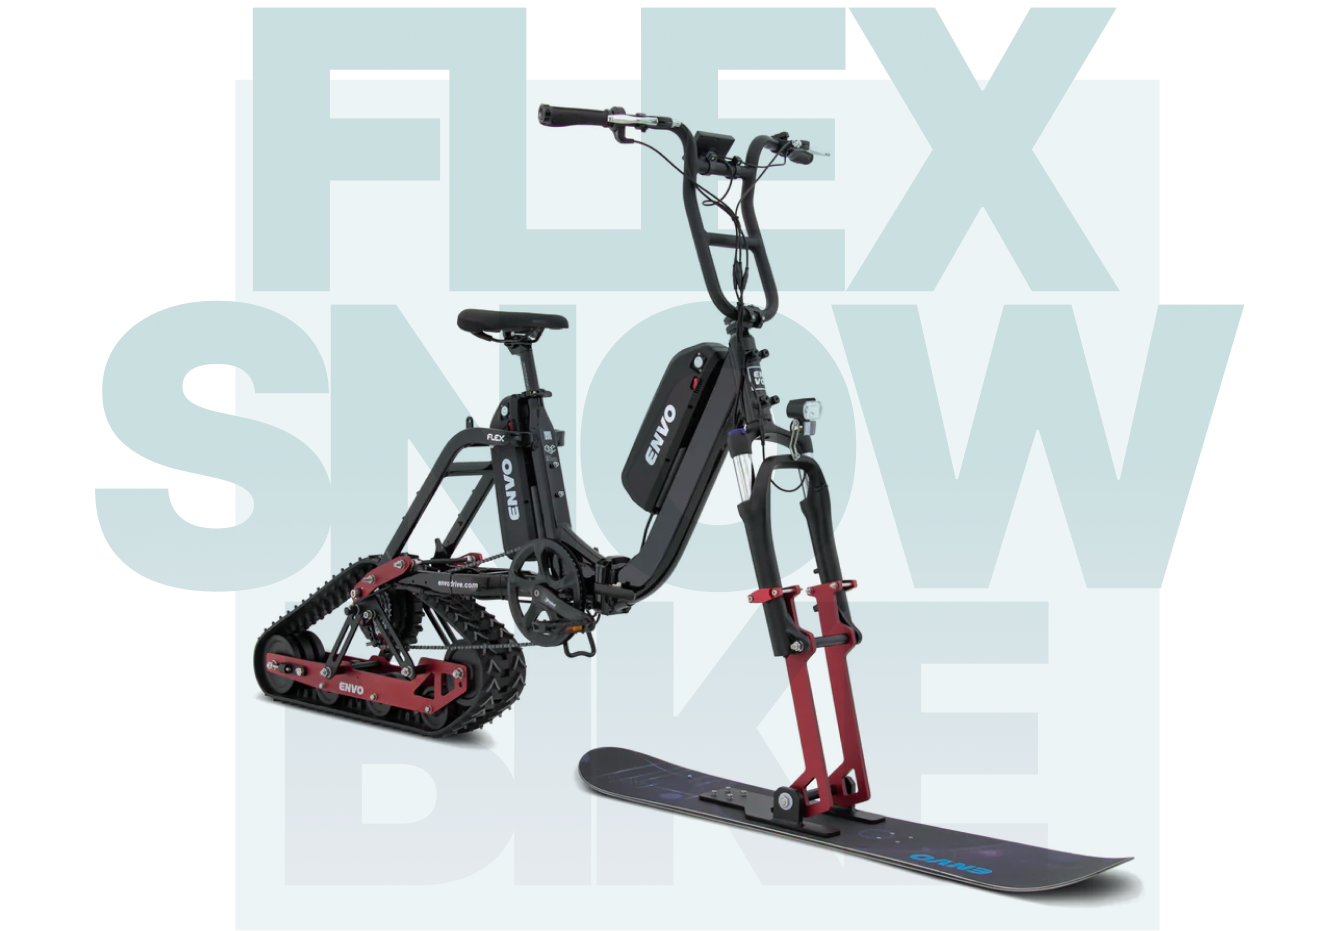 Flex Electric Snowbike